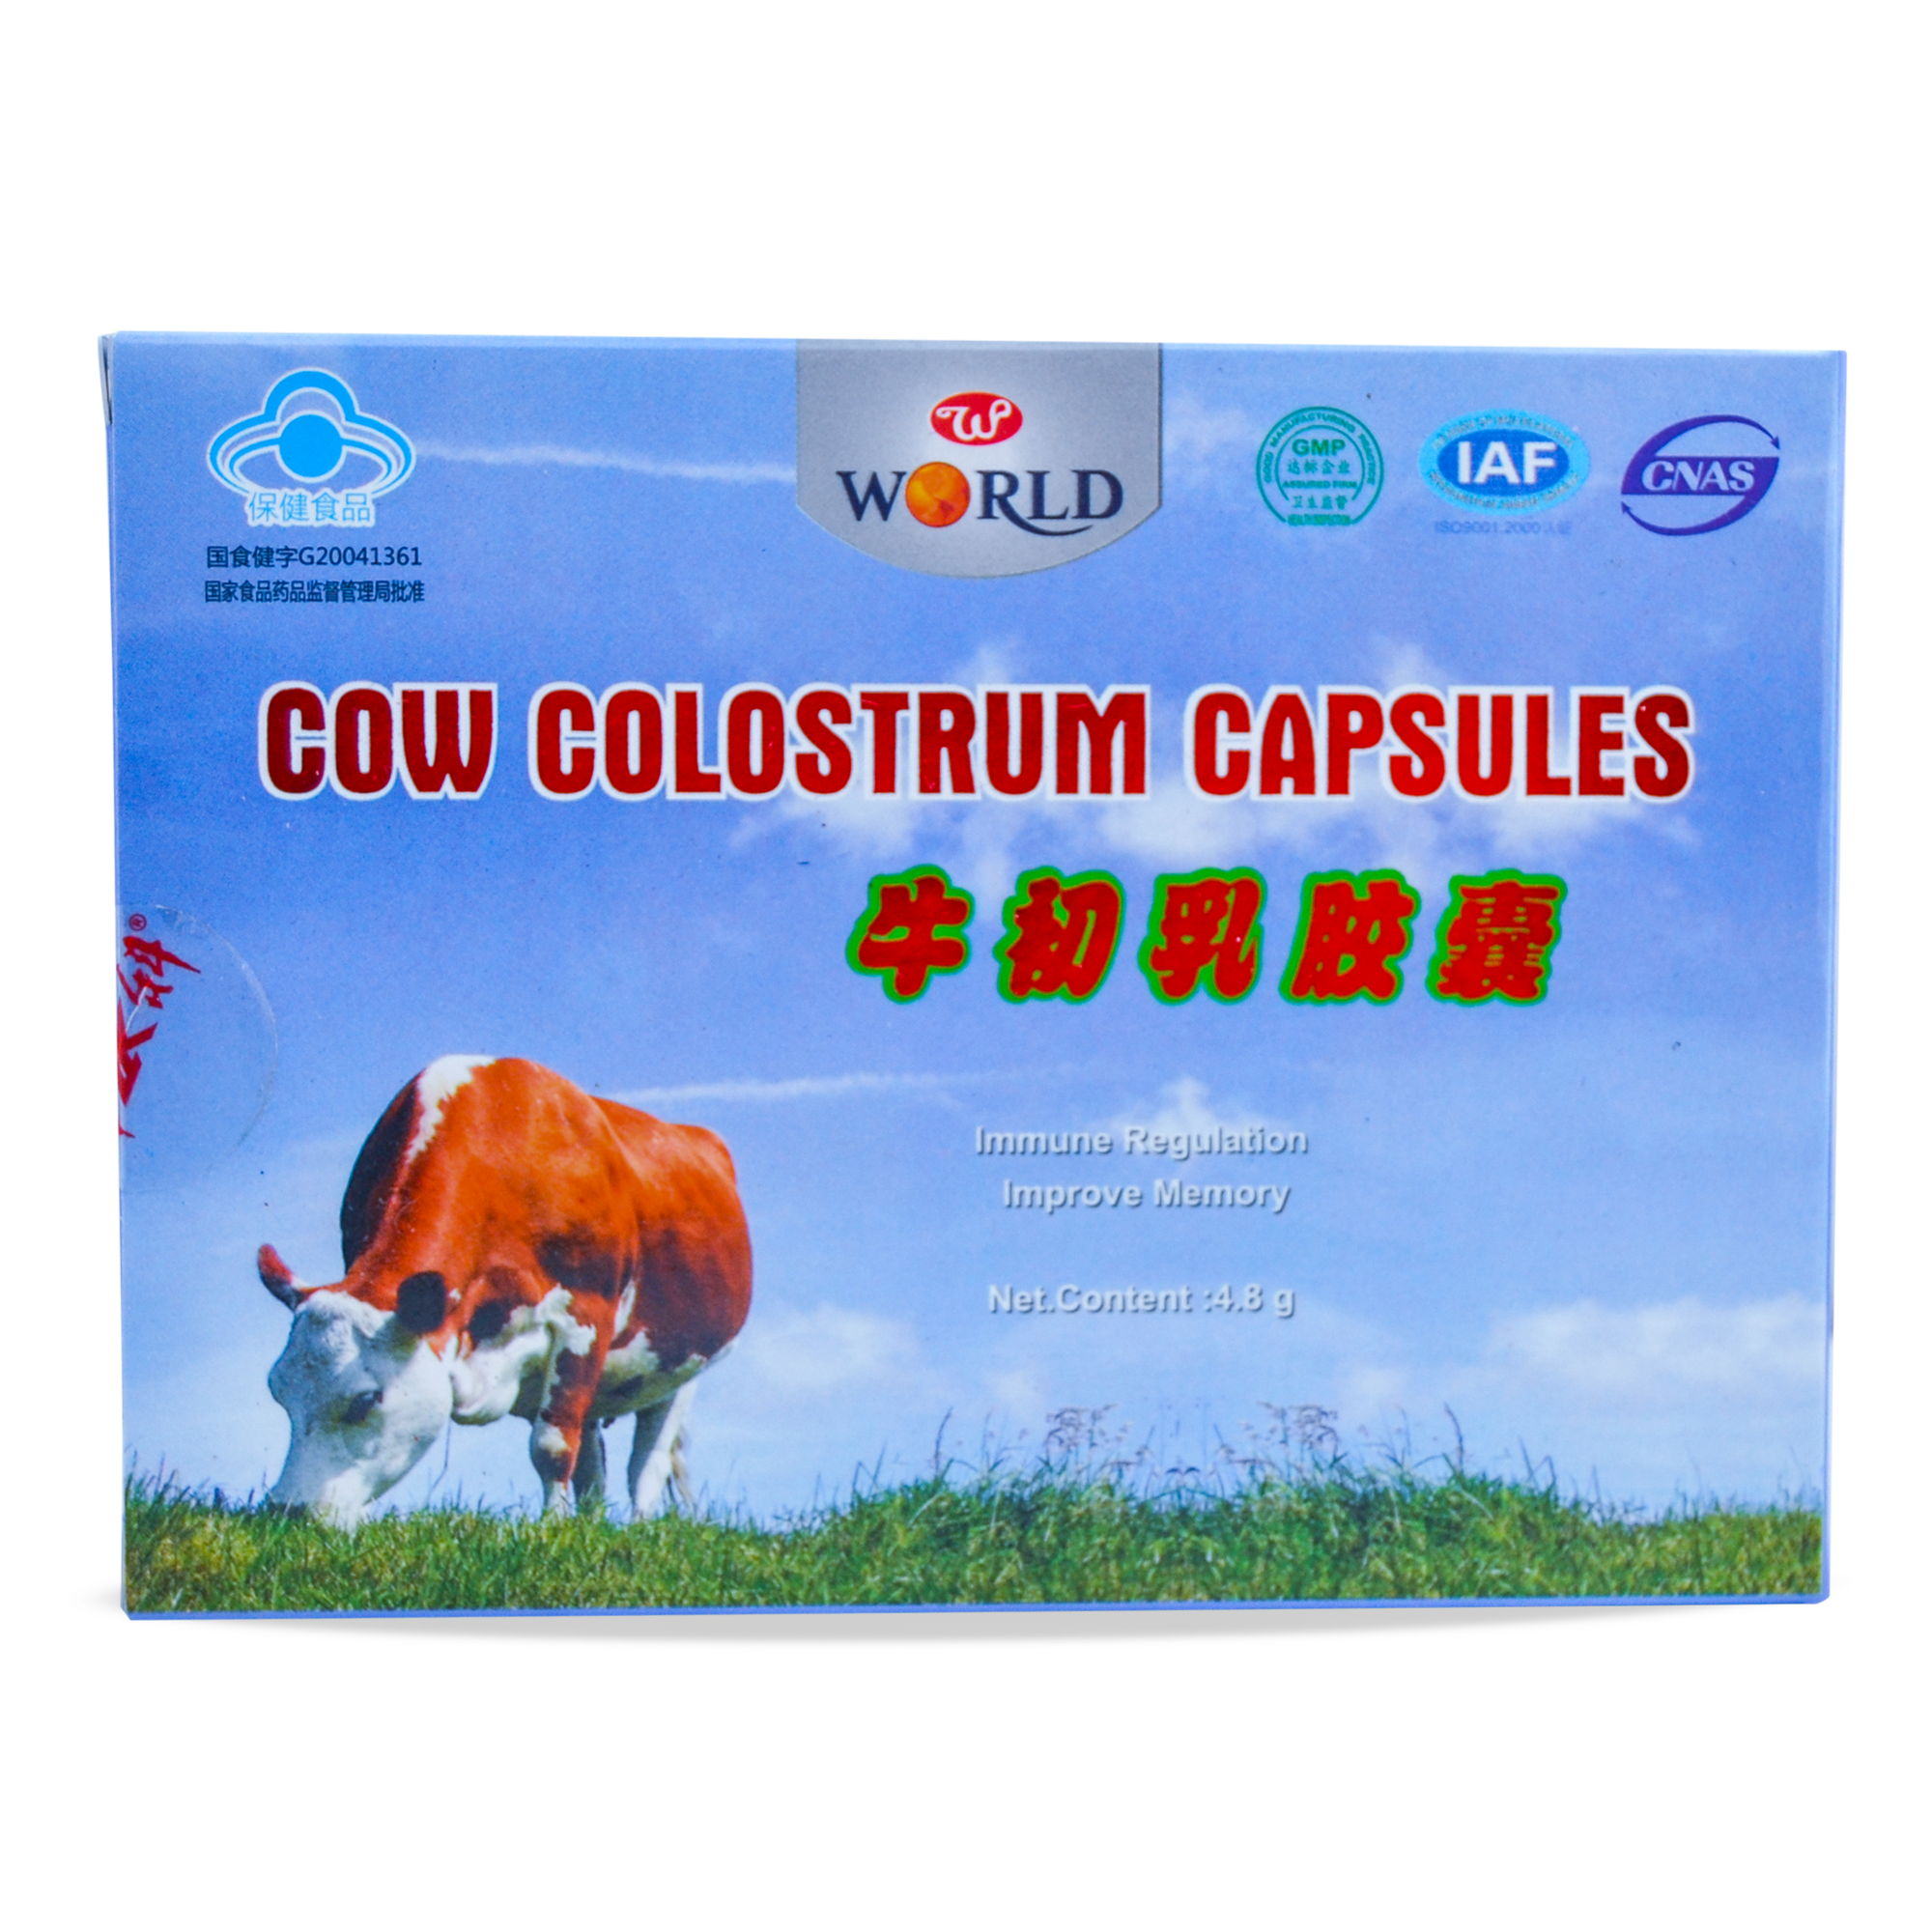 35 cow colostrum